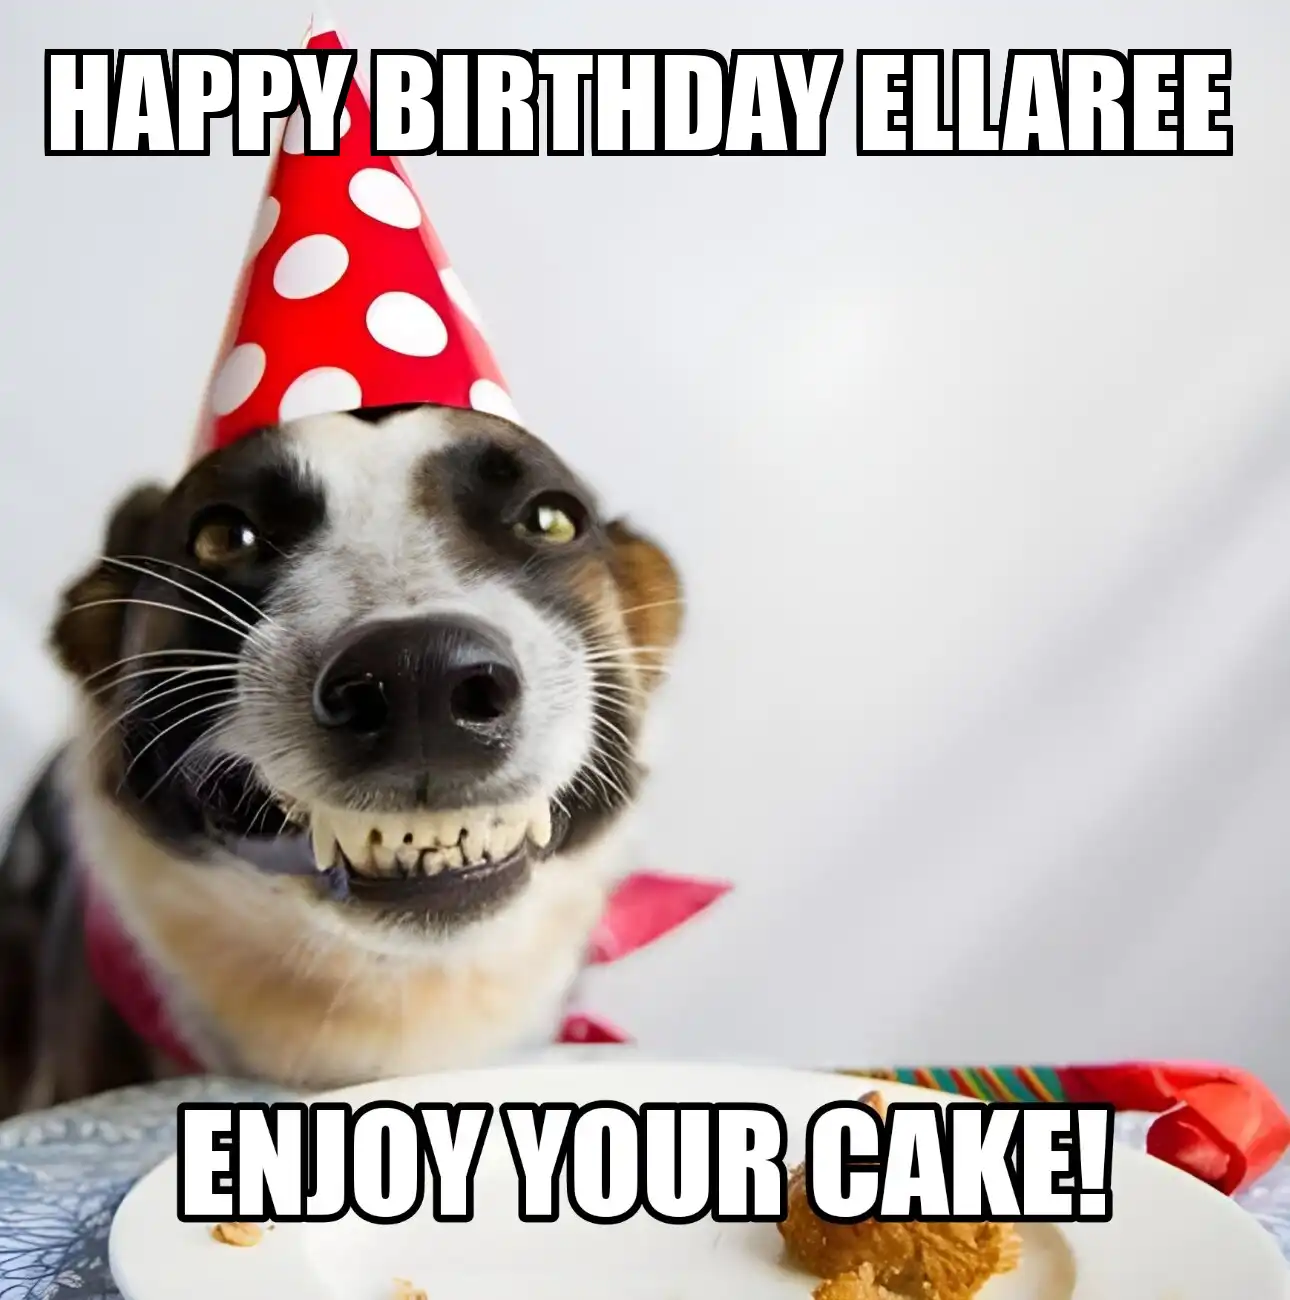 Happy Birthday Ellaree Enjoy Your Cake Dog Meme